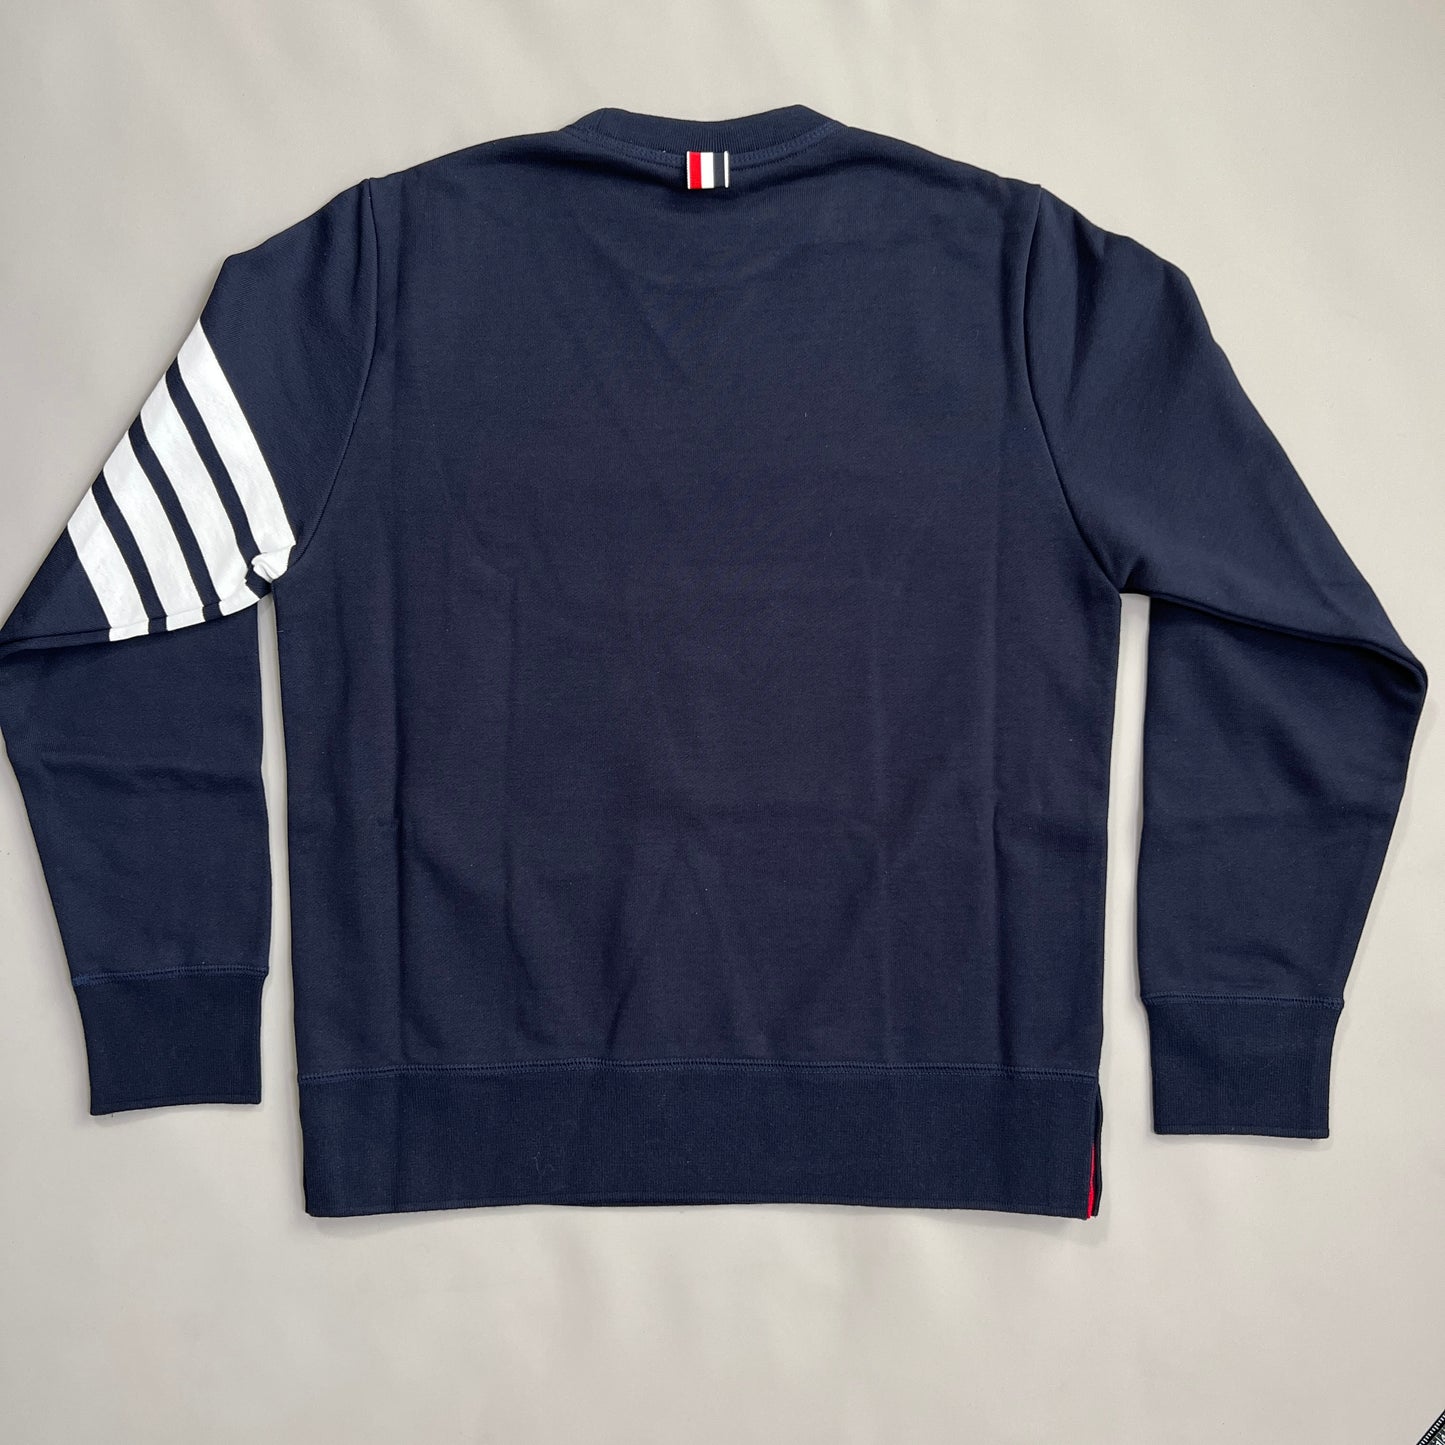 THOM BROWNE Classic Sweatshirt w/ 4 Bar Sleeve in Classic Loop Back Navy Size 5 (New)